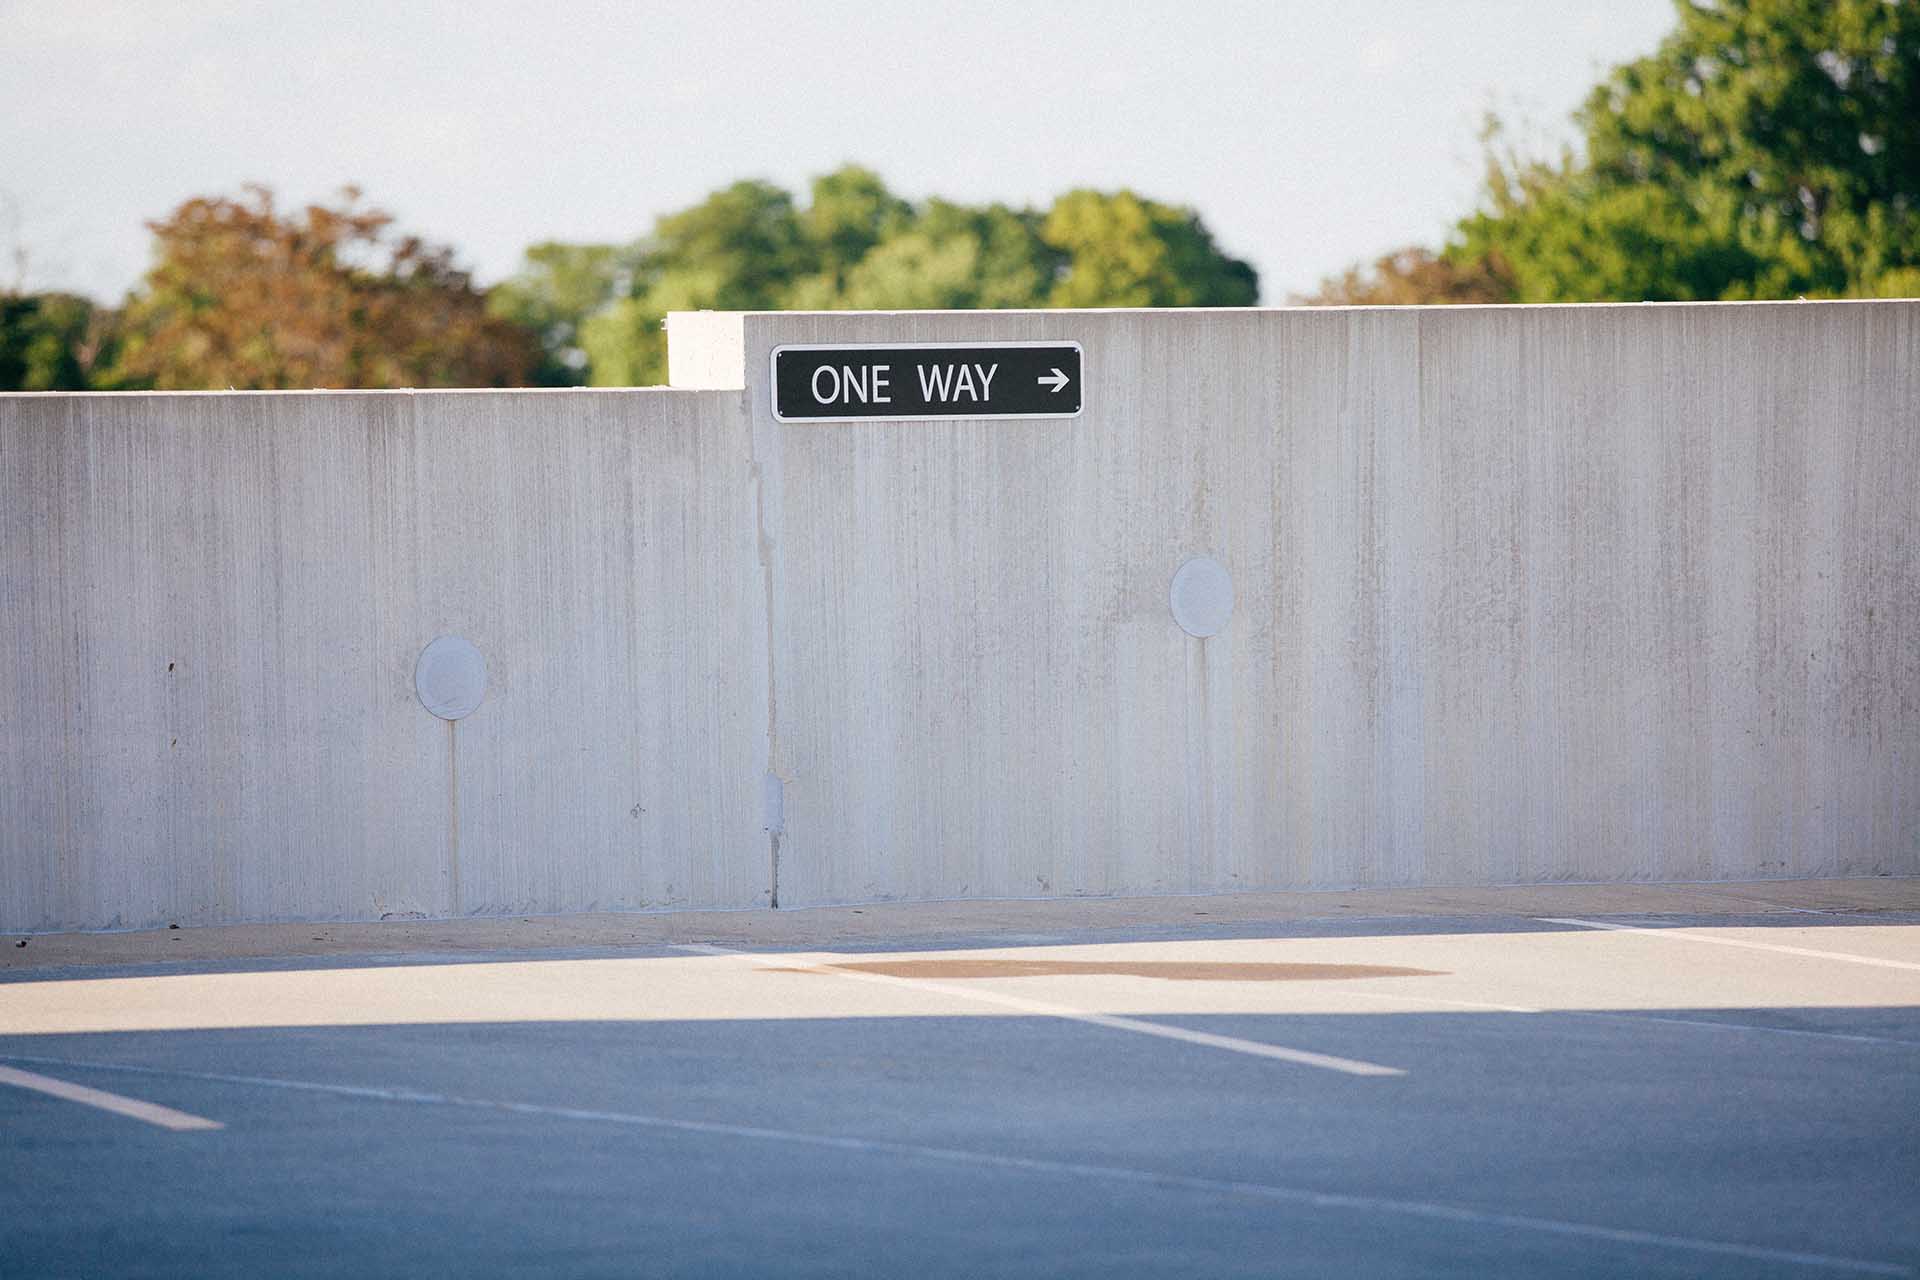 t2informatik Blog: Conway's one-way street